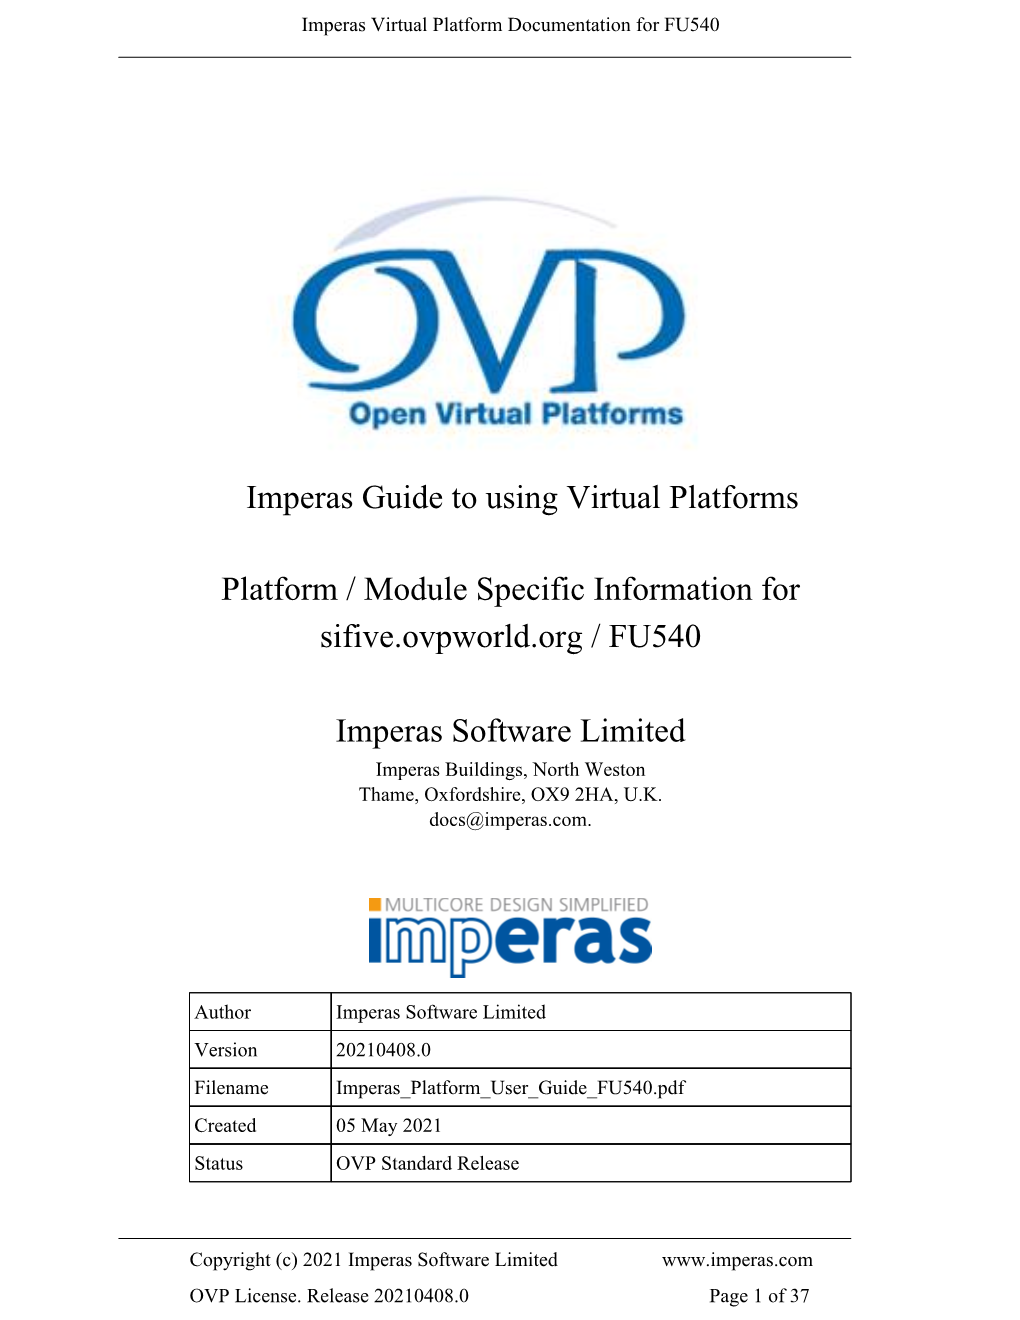 Imperas Platform User Guide